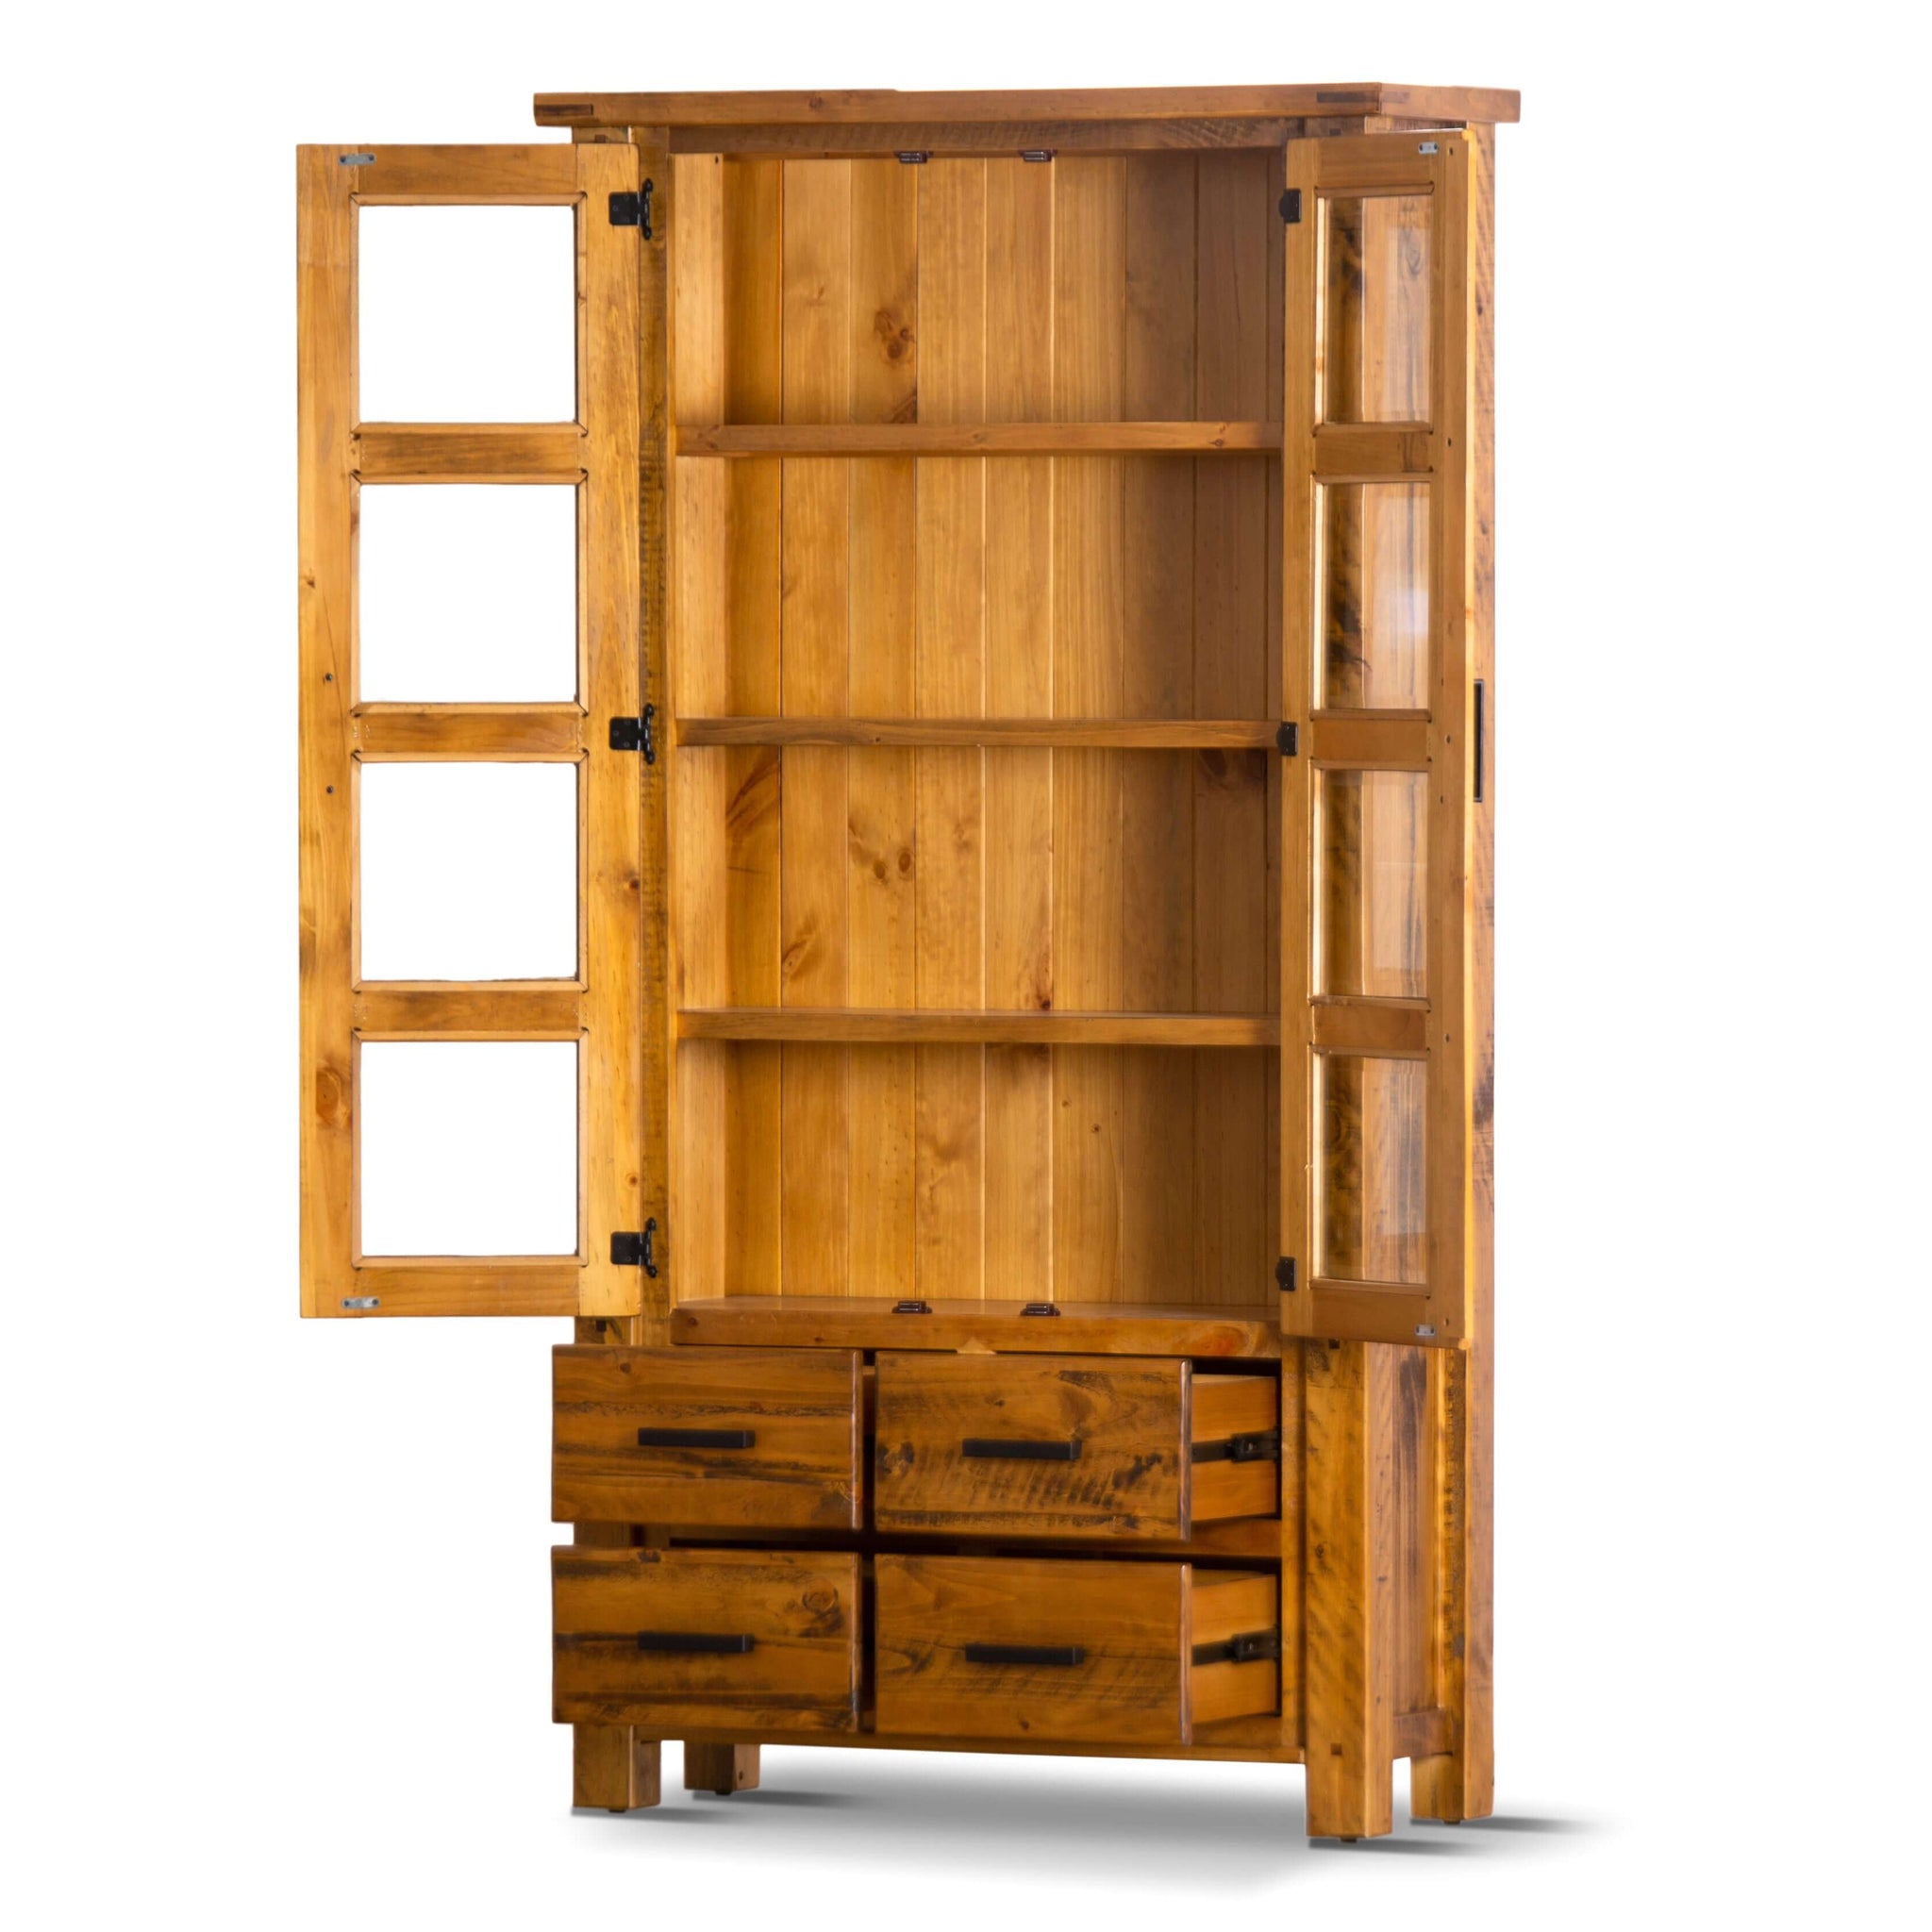 Teasel Display Unit Glass Door Bookcase Solid Pine Timber Wood - Rustic Oak-Upinteriors